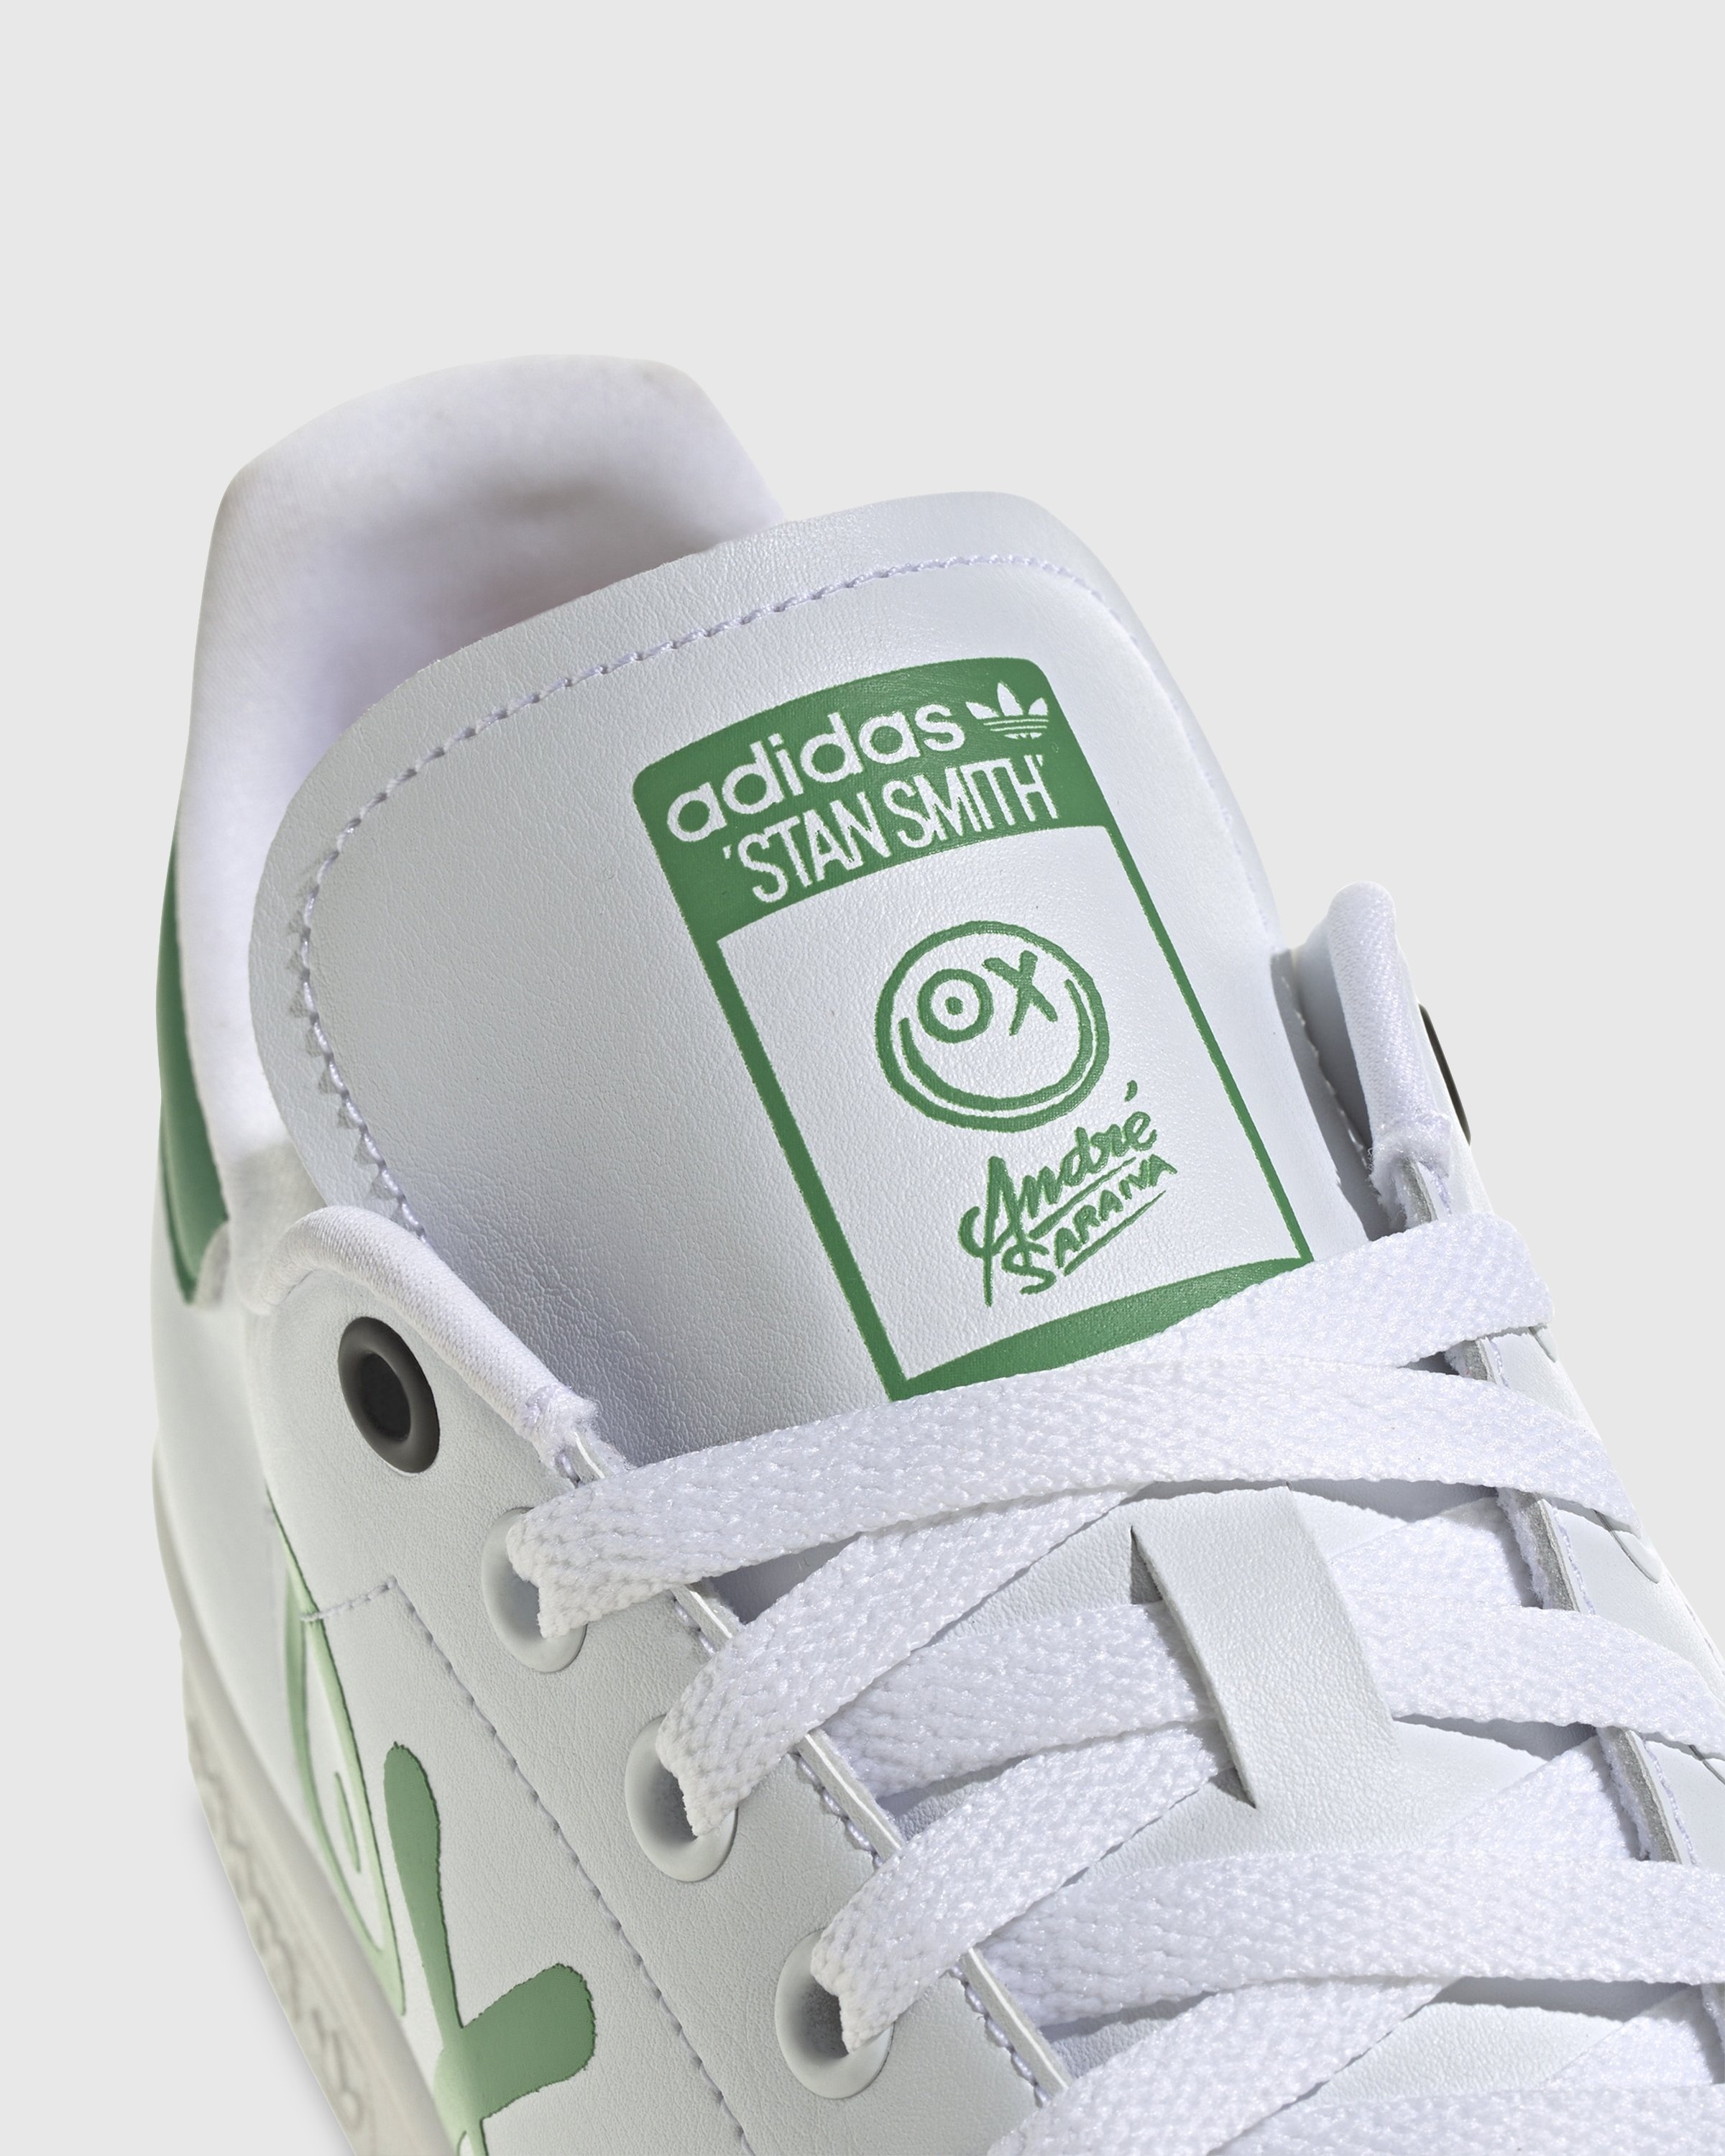 Adidas – André Saraiva Stan Smith White/Green - Sneakers - White - Image 6